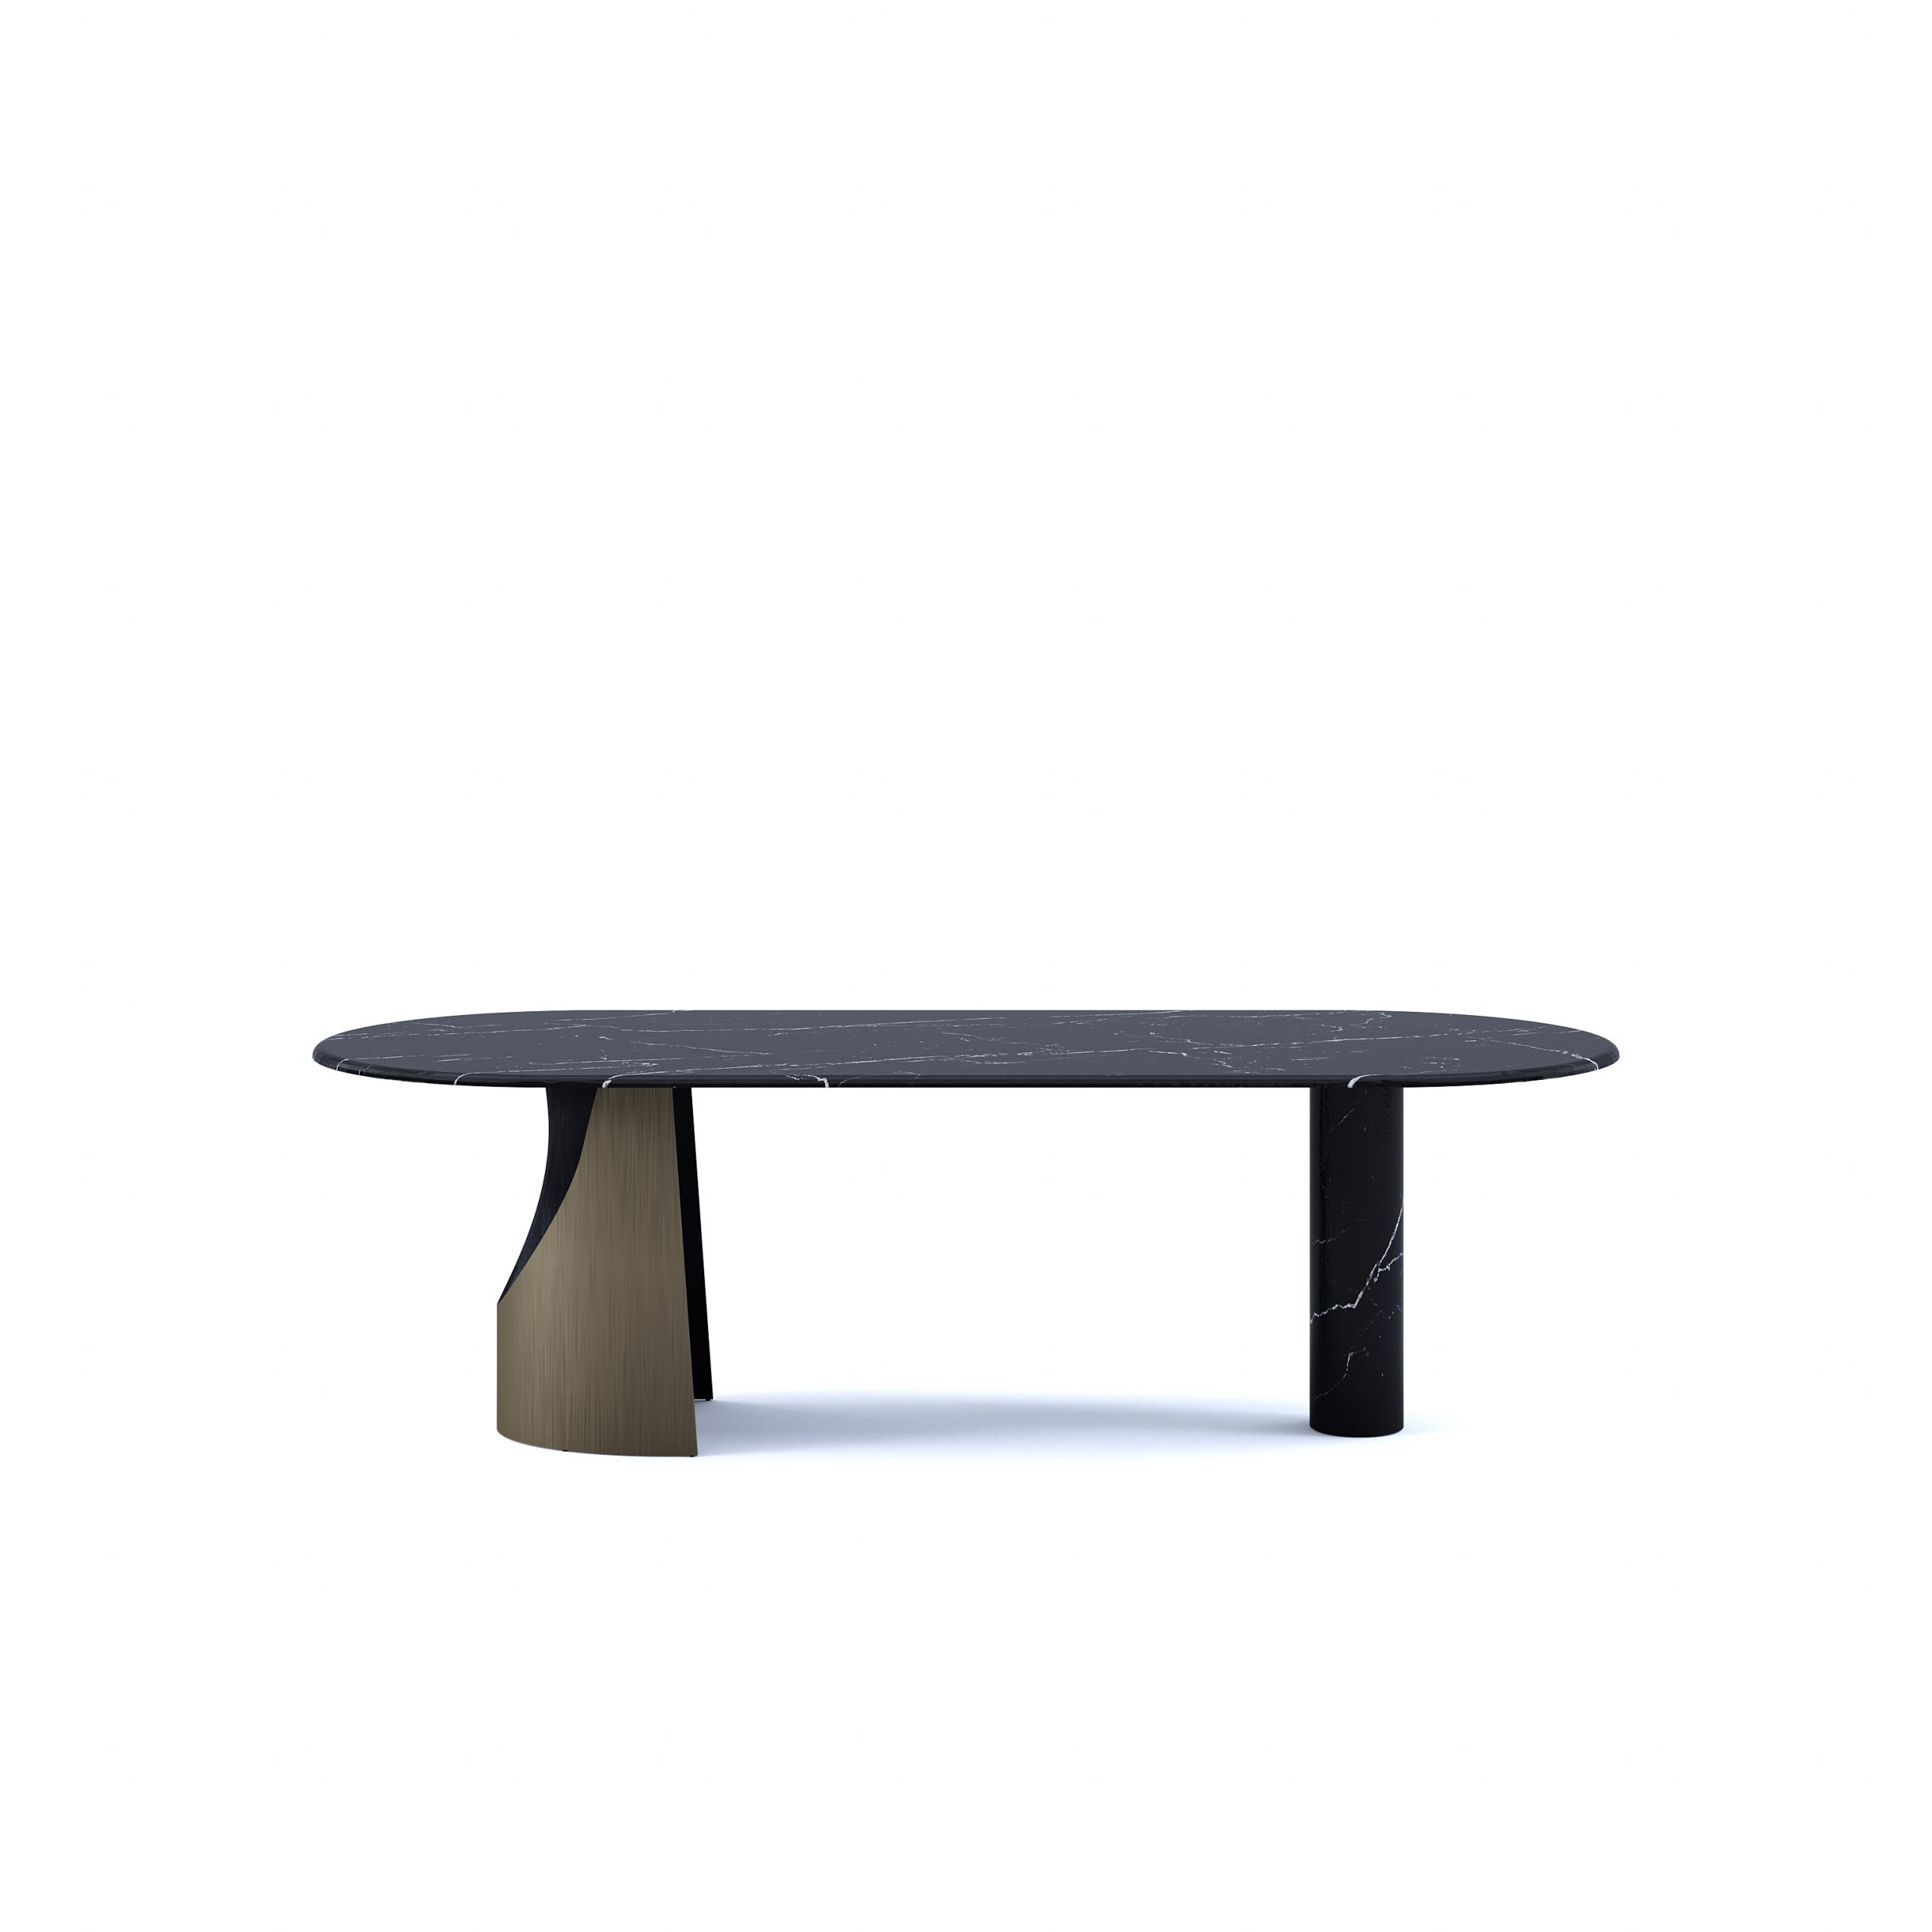 Ellipse oval table